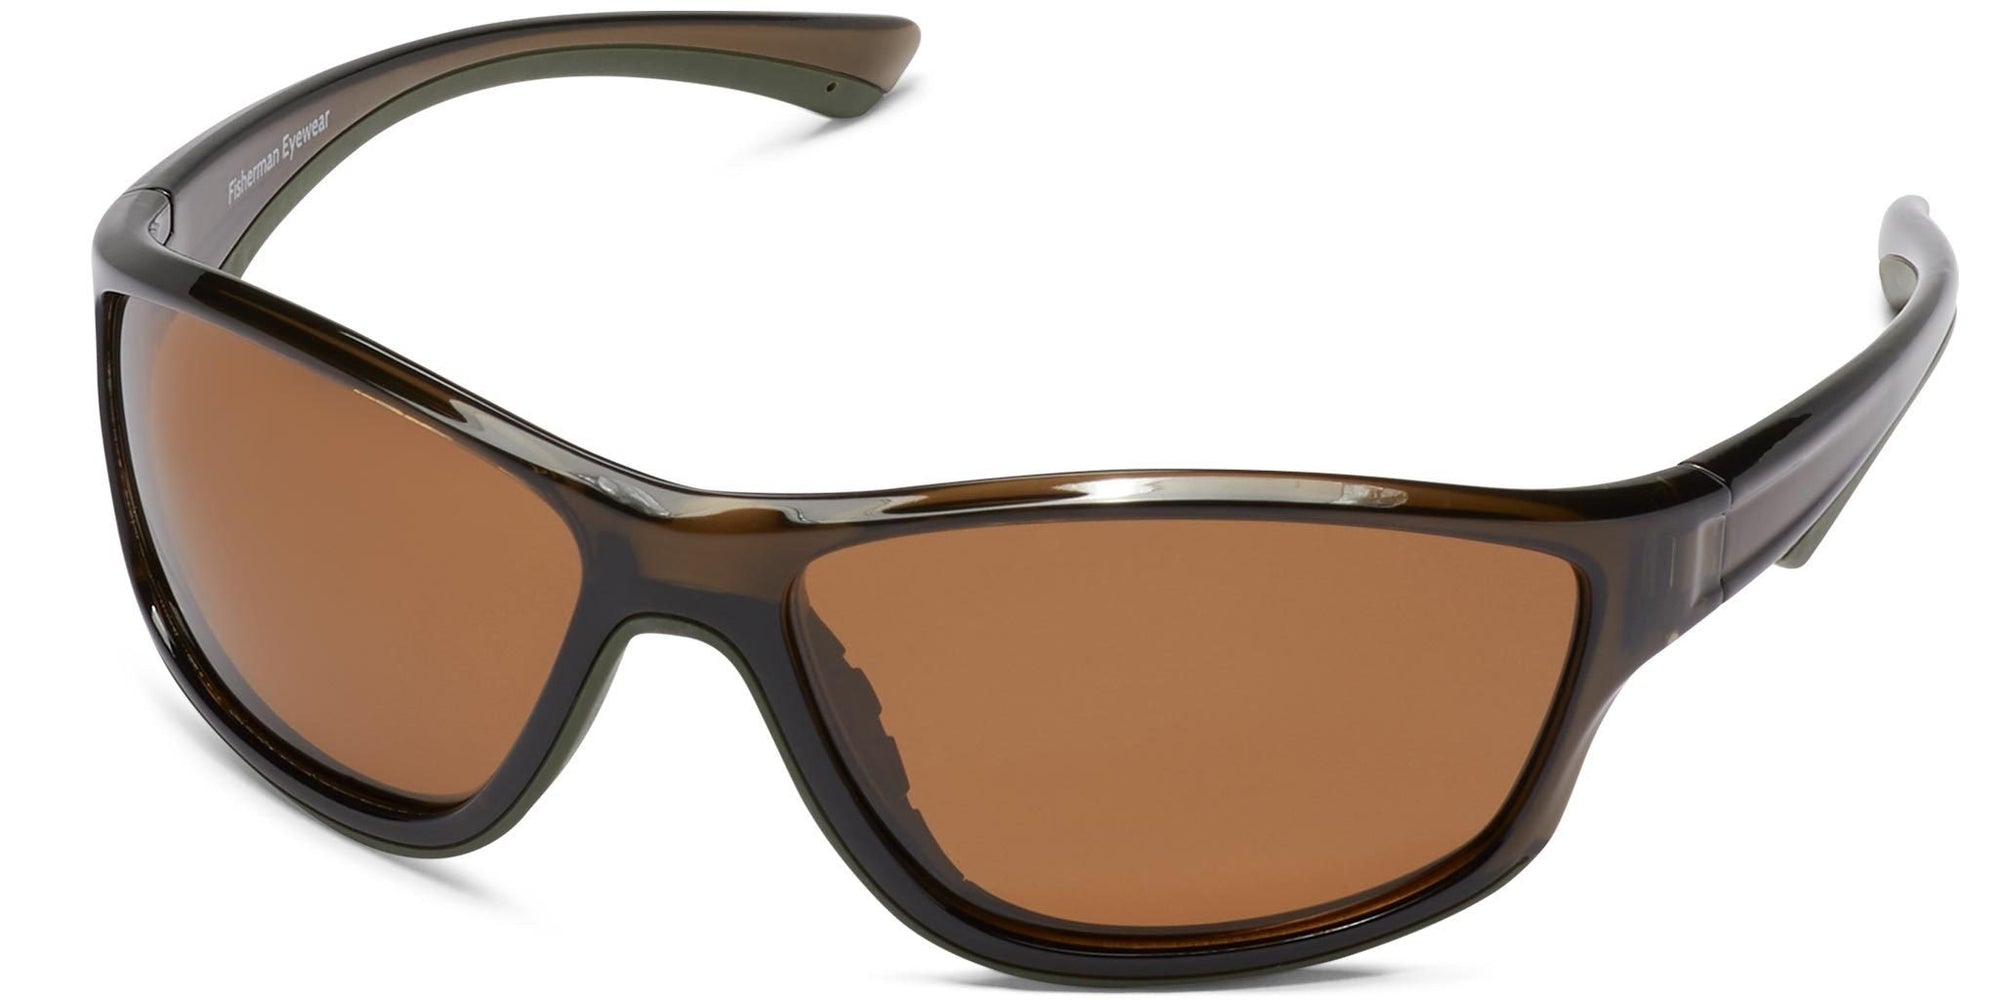 Rapid - Crystal Olive/Brown Lens - Polarized Sunglasses